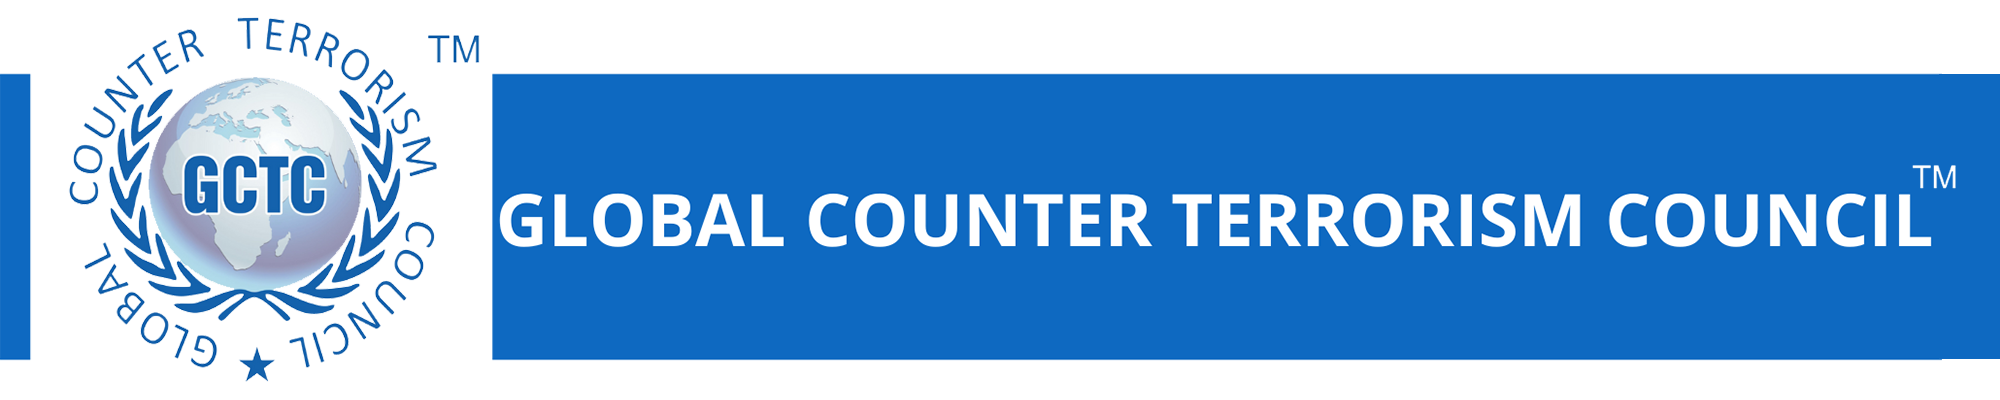 Global Counter Terrorism Council